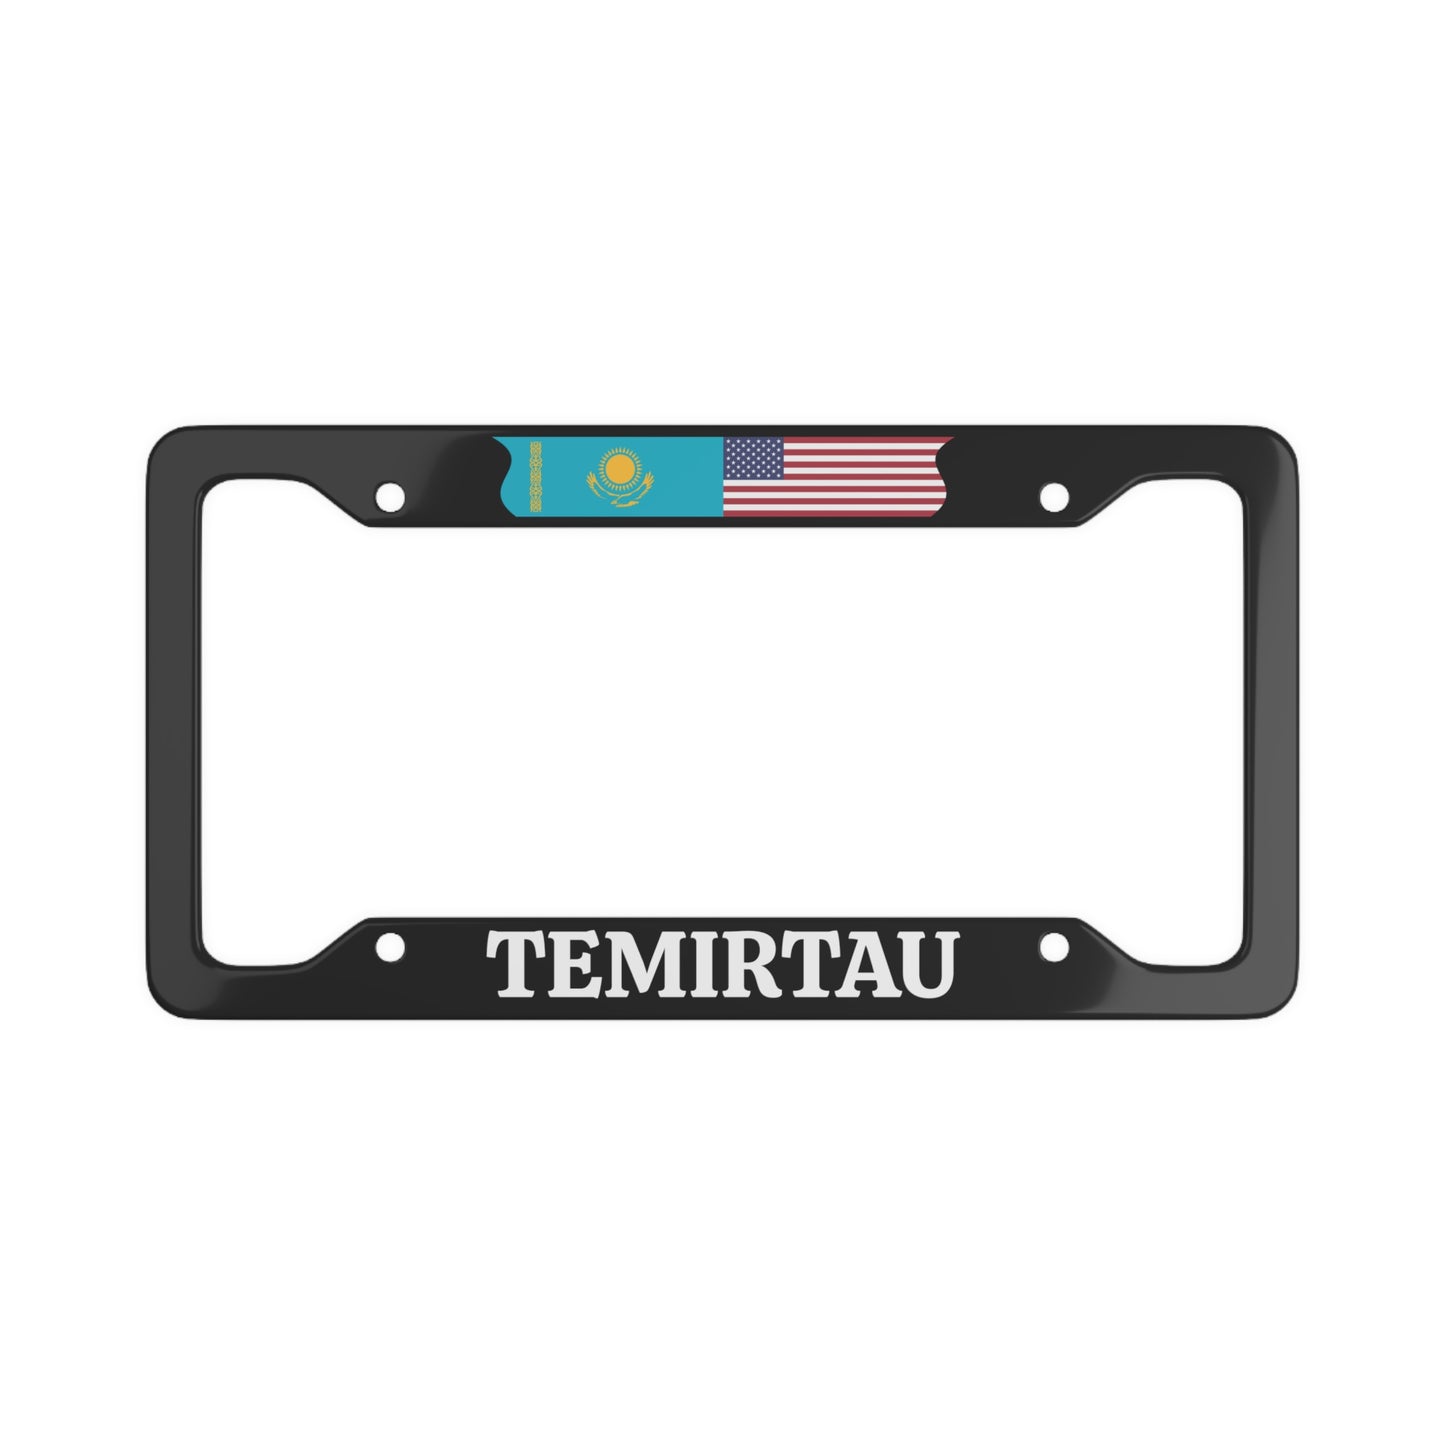 Temirtau KZ License Plate Frame